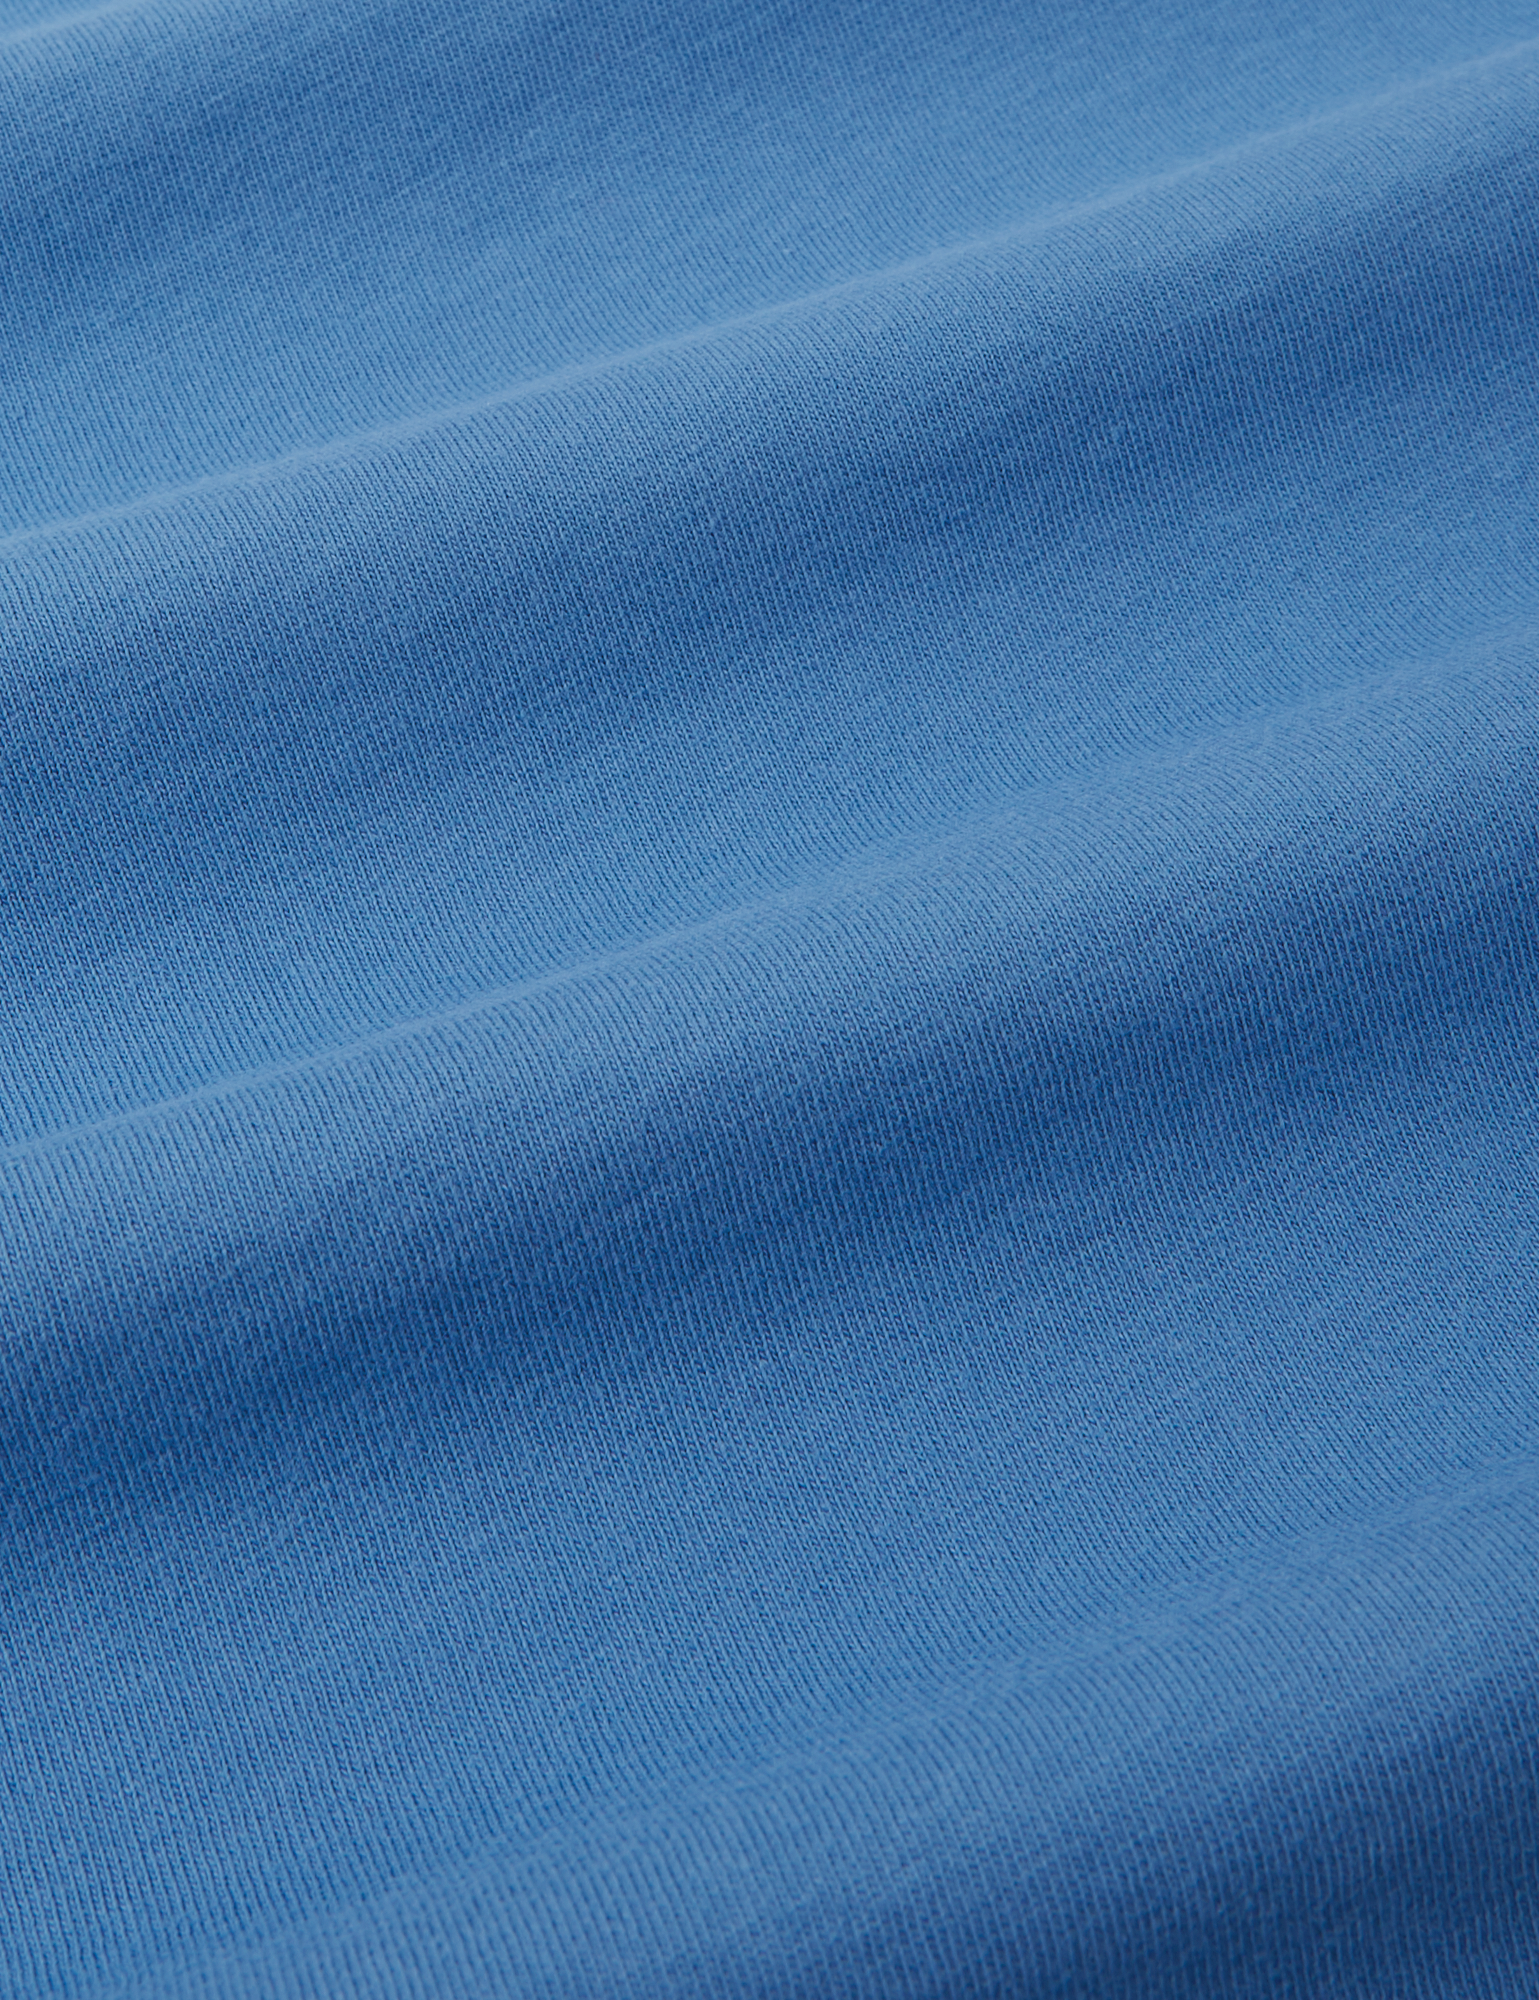 The Organic Vintage Tee in Greek Blue fabric detail